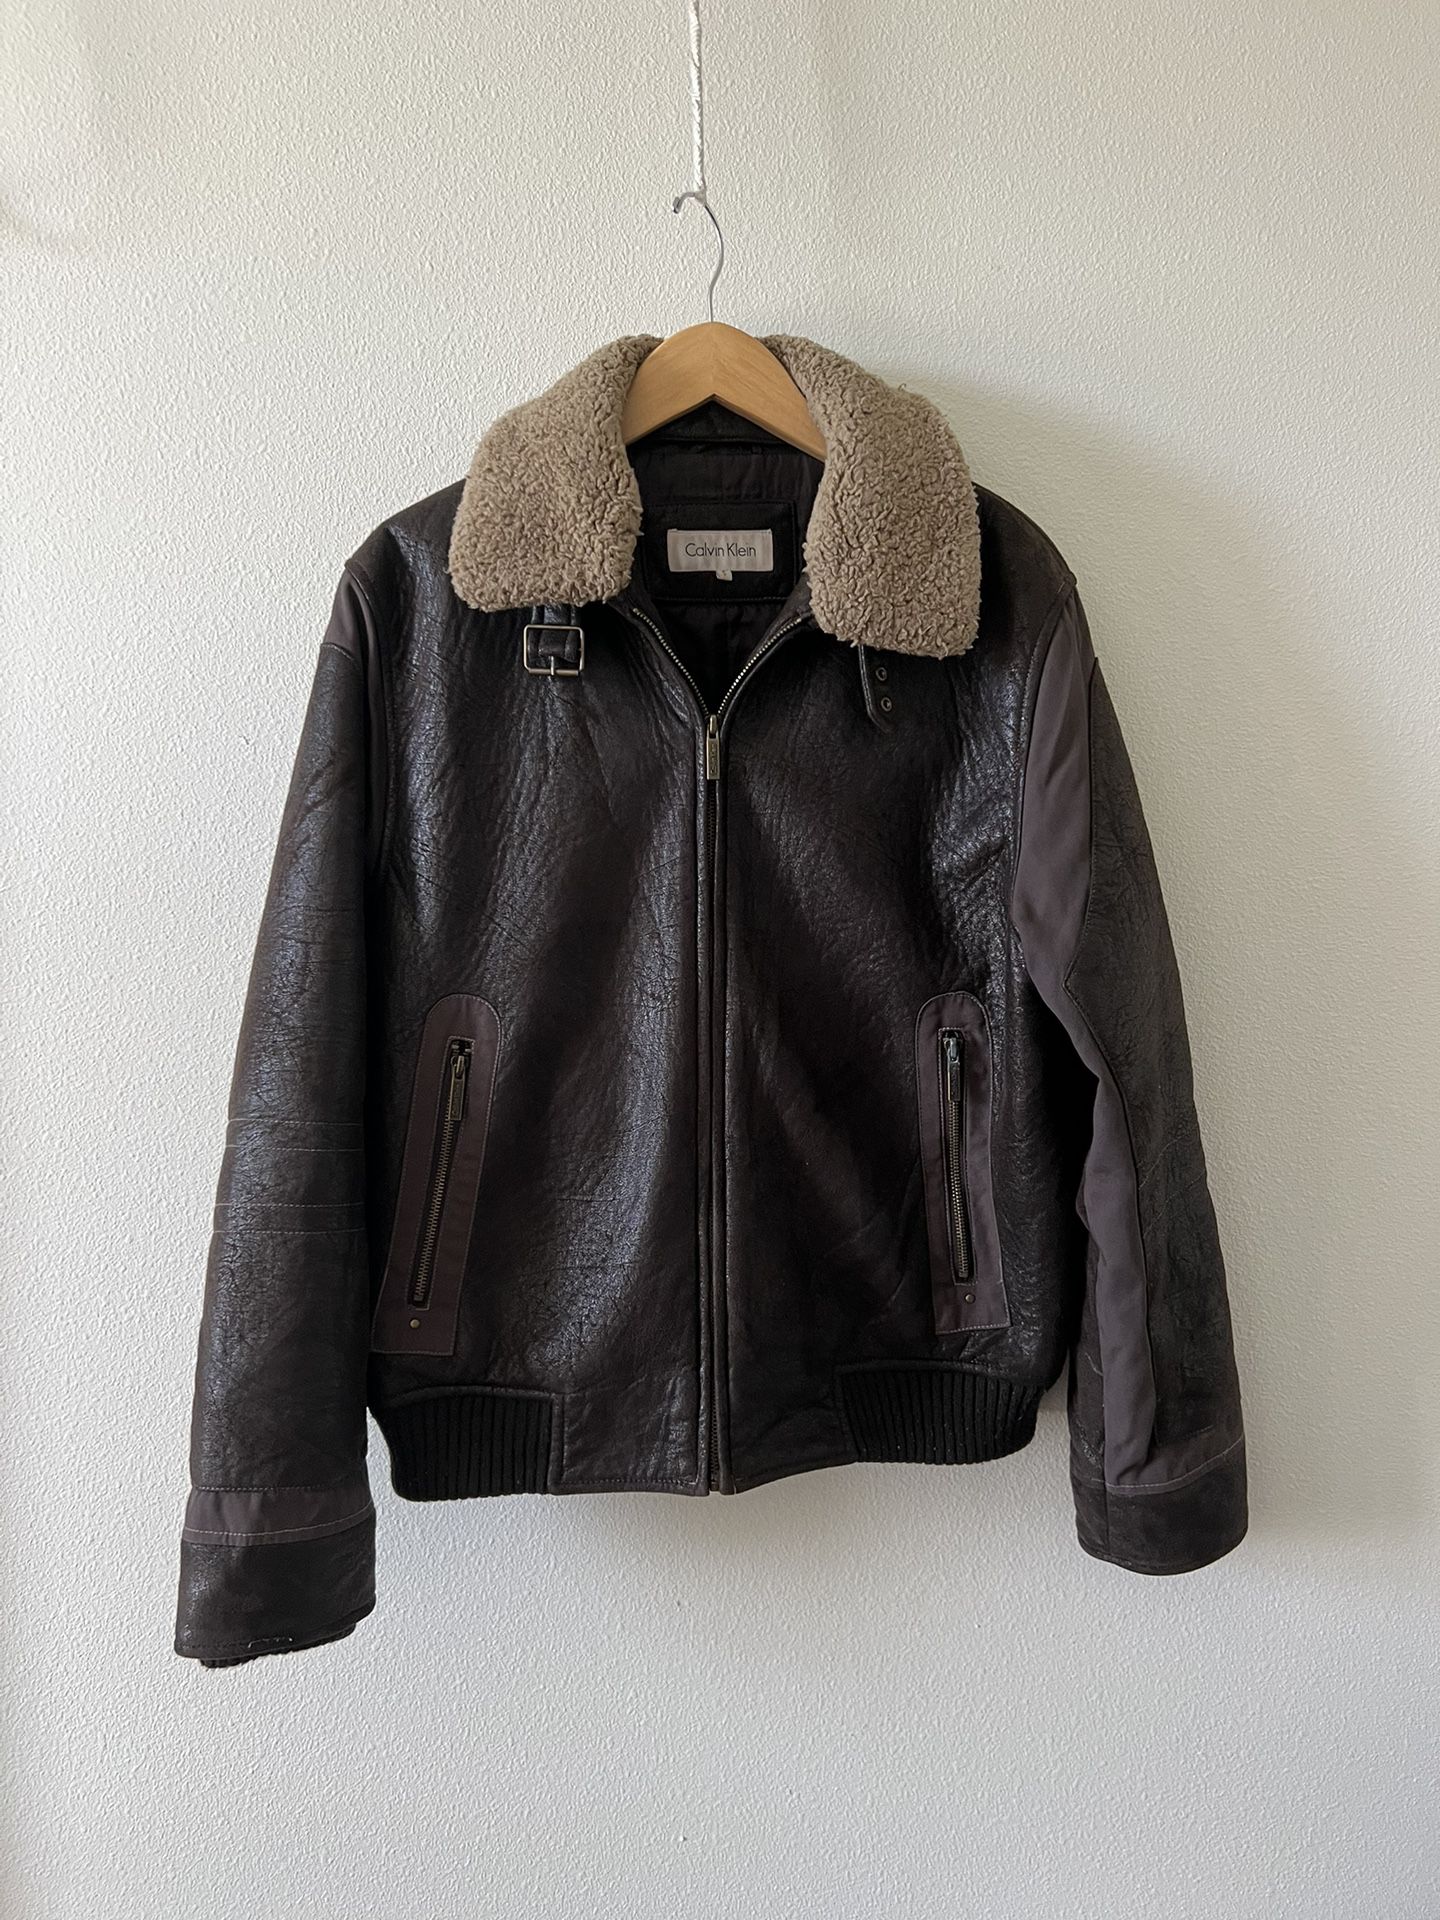 Men’s Calvin Klein faux shearling Sherpa jacket size Small